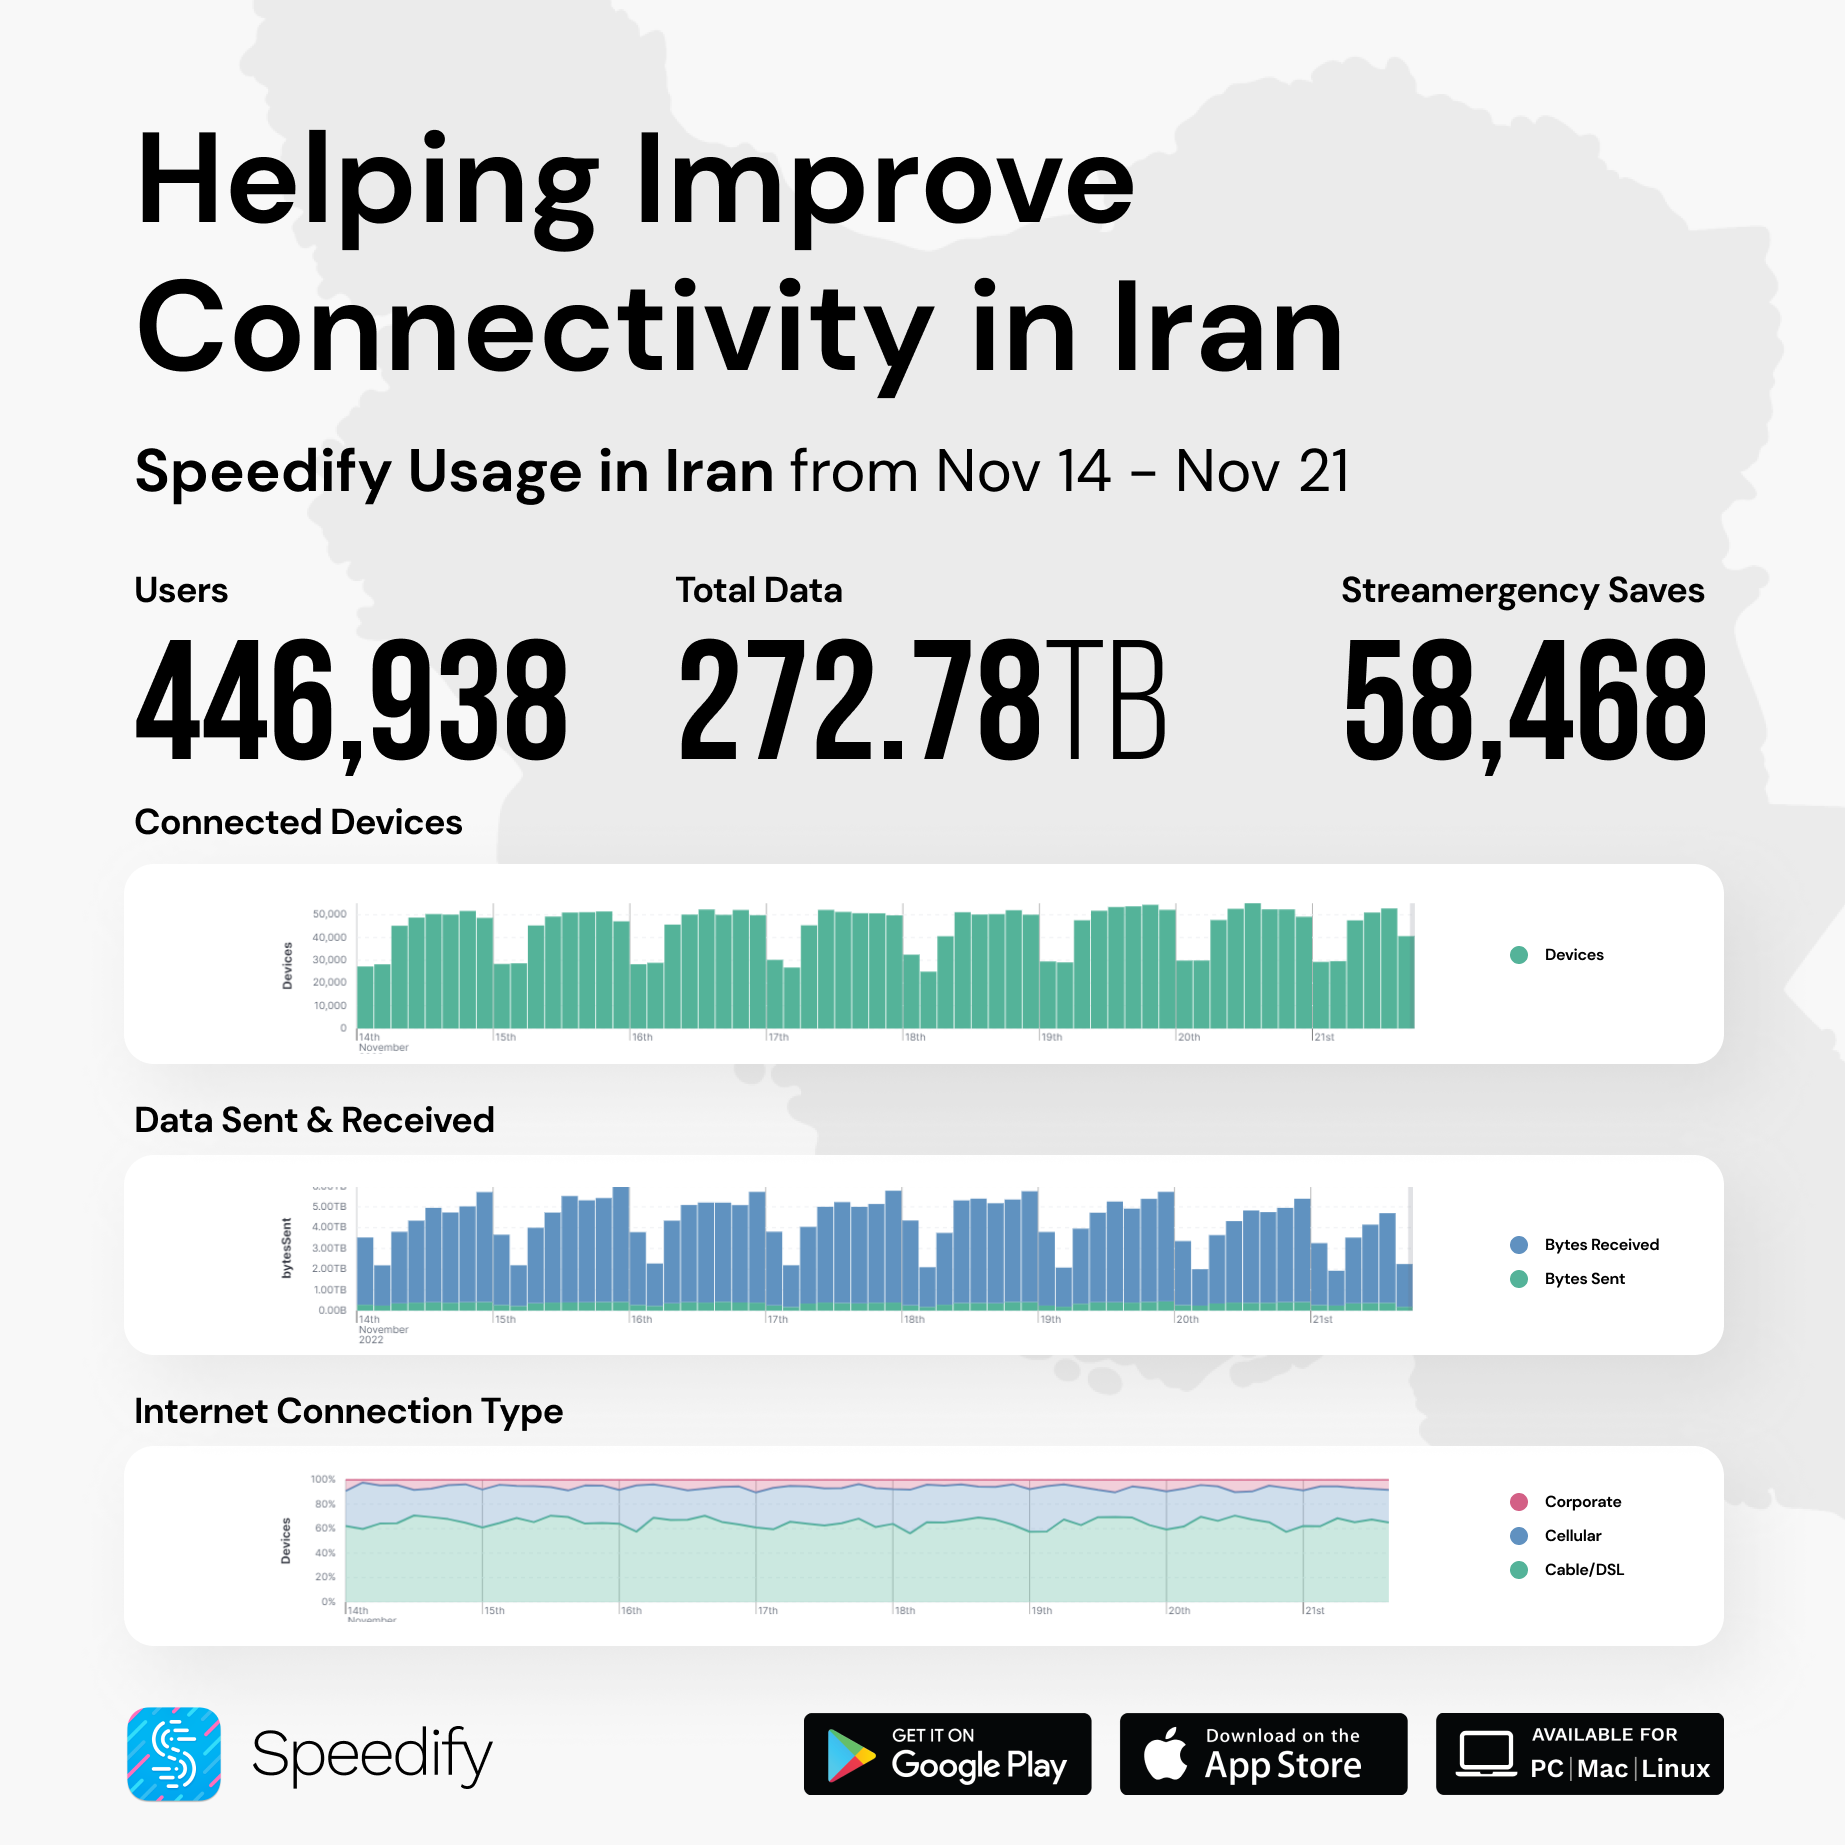 Nov 21 - Iran Internet usage for Speedify users